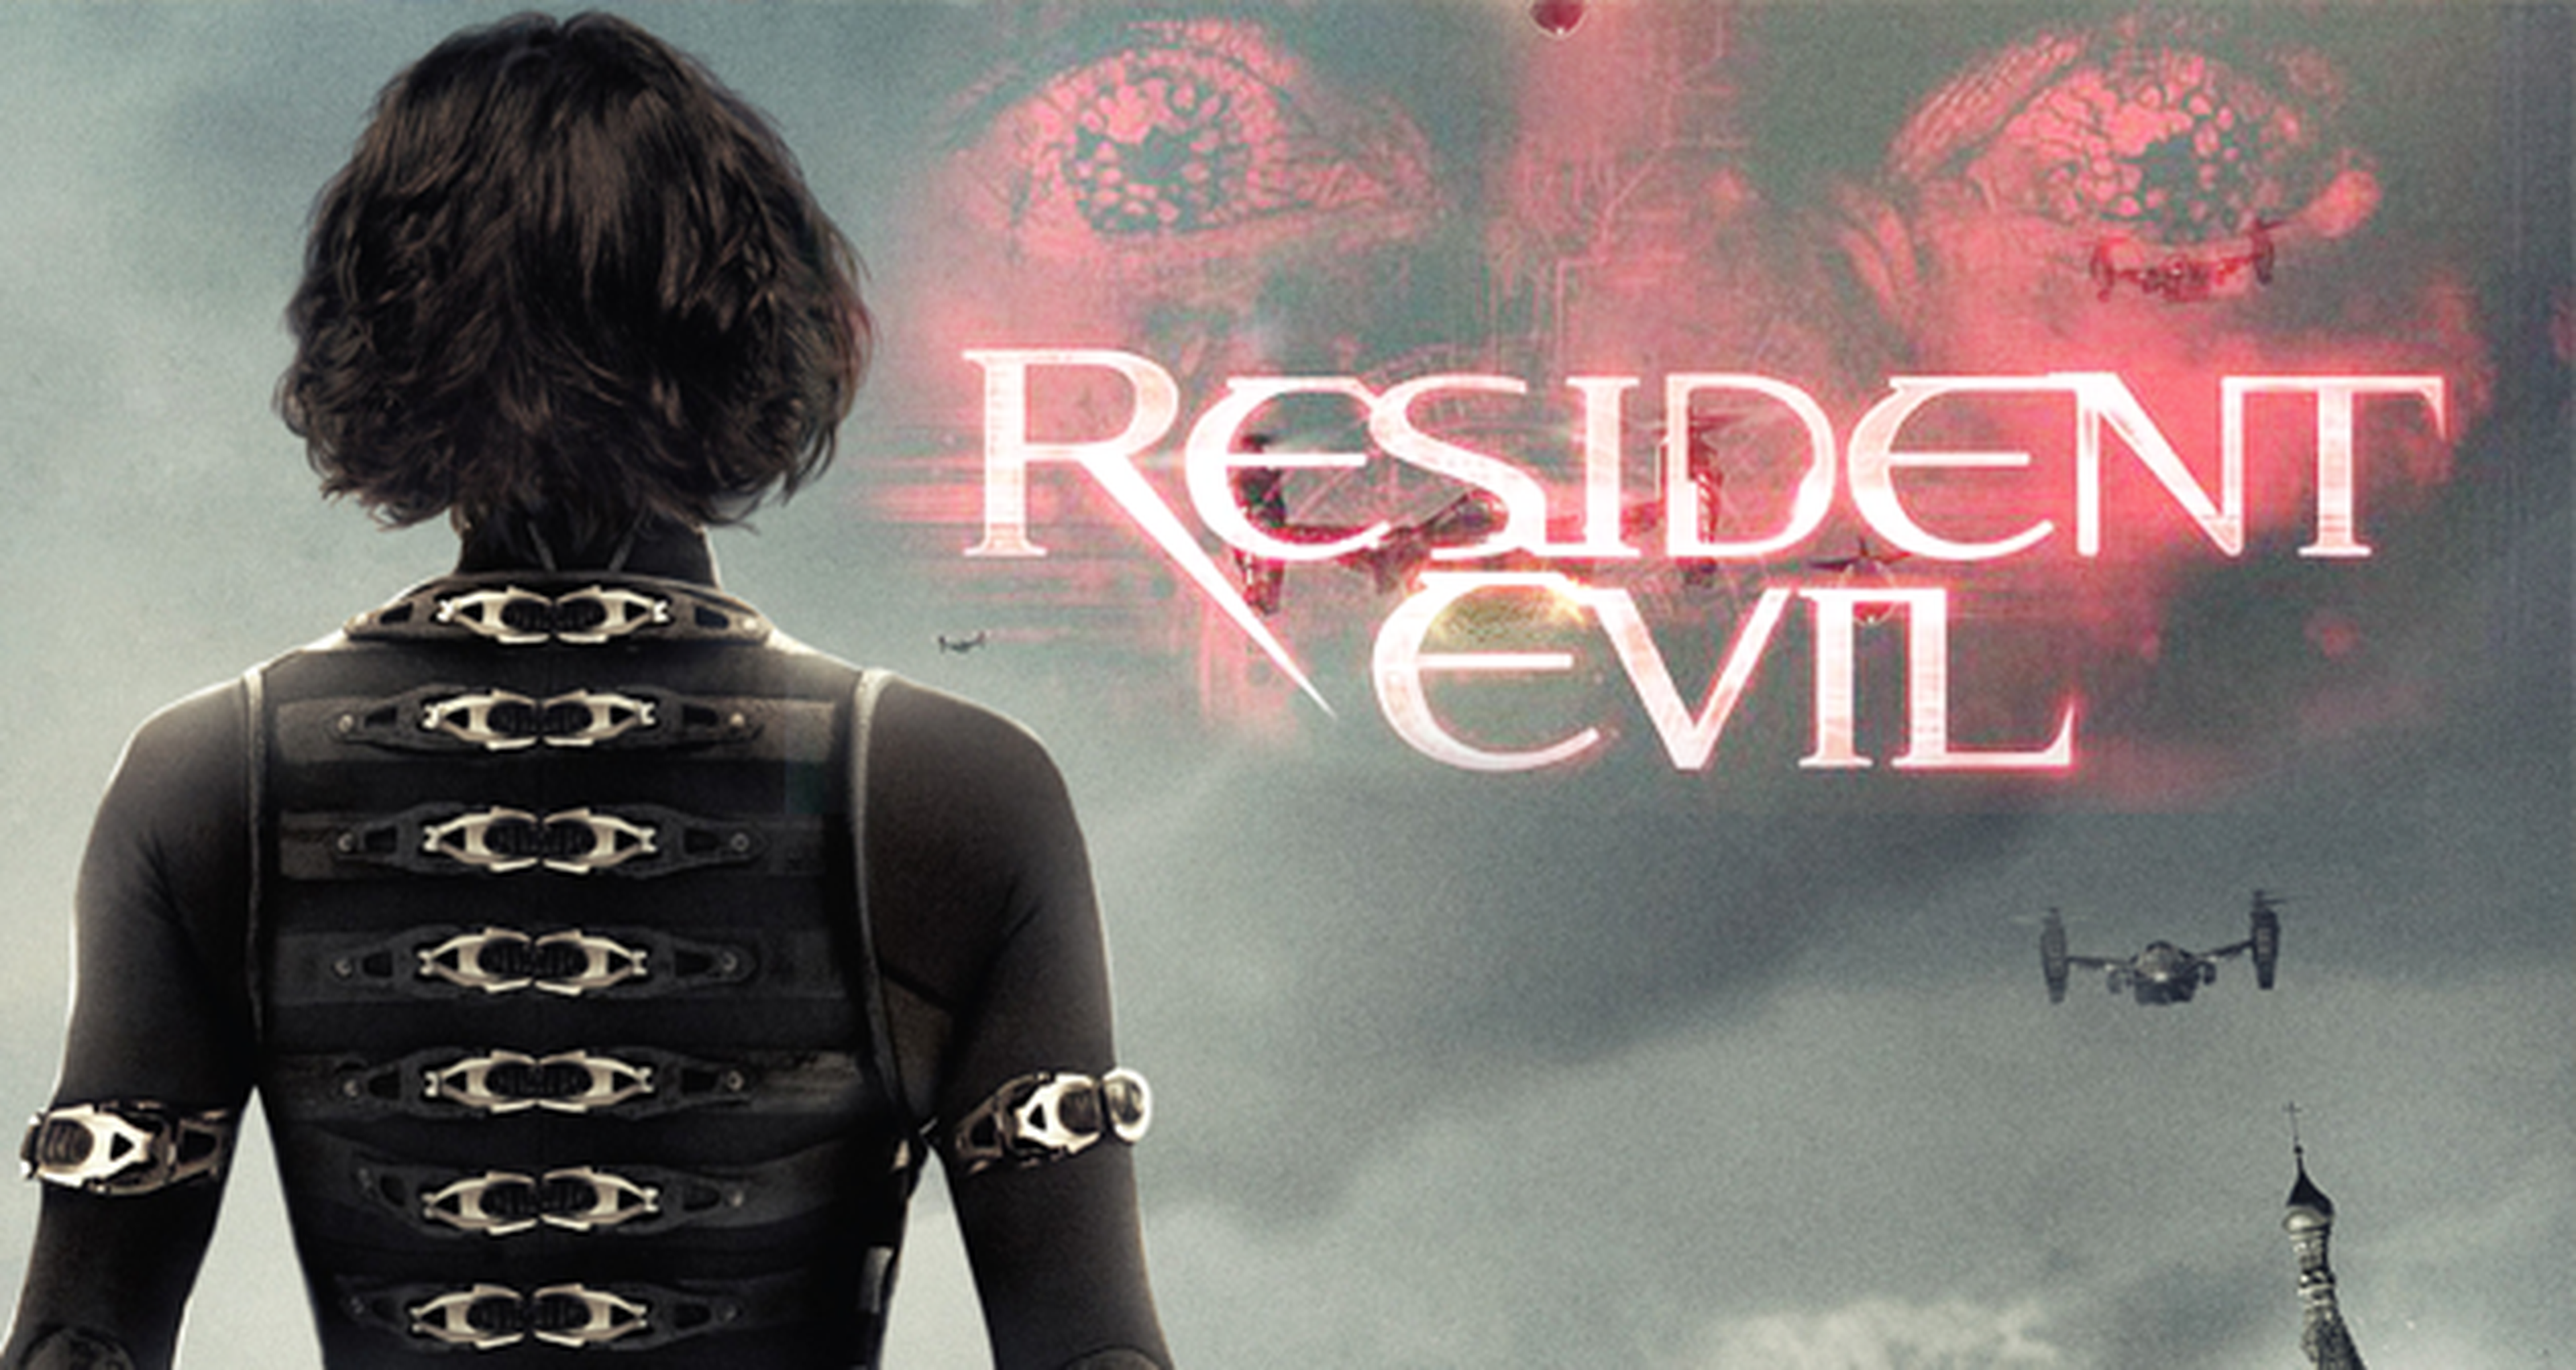 Resident Evil tendrá una serie de TV de imagen real